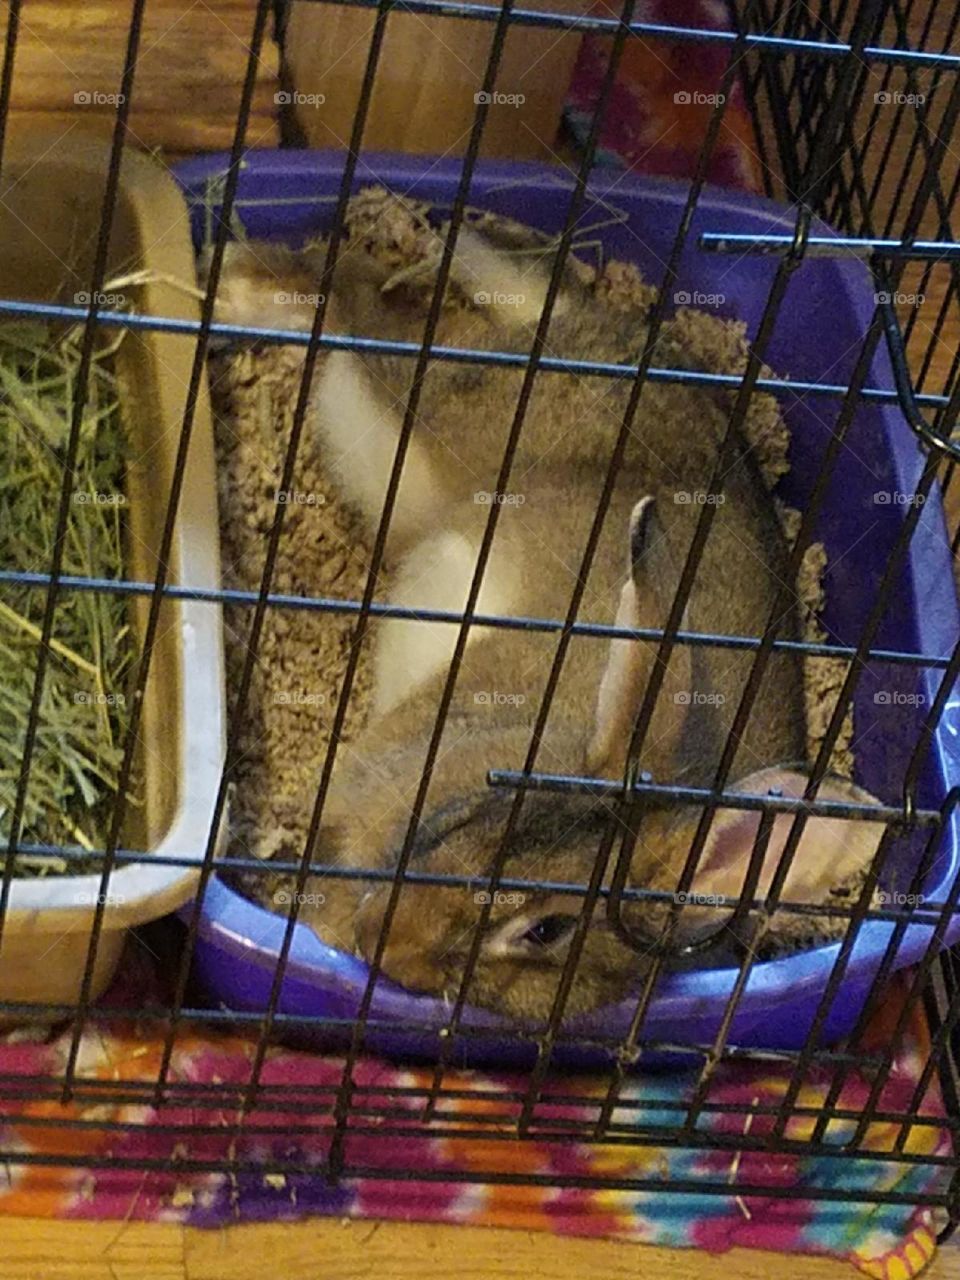 Rabbit laying